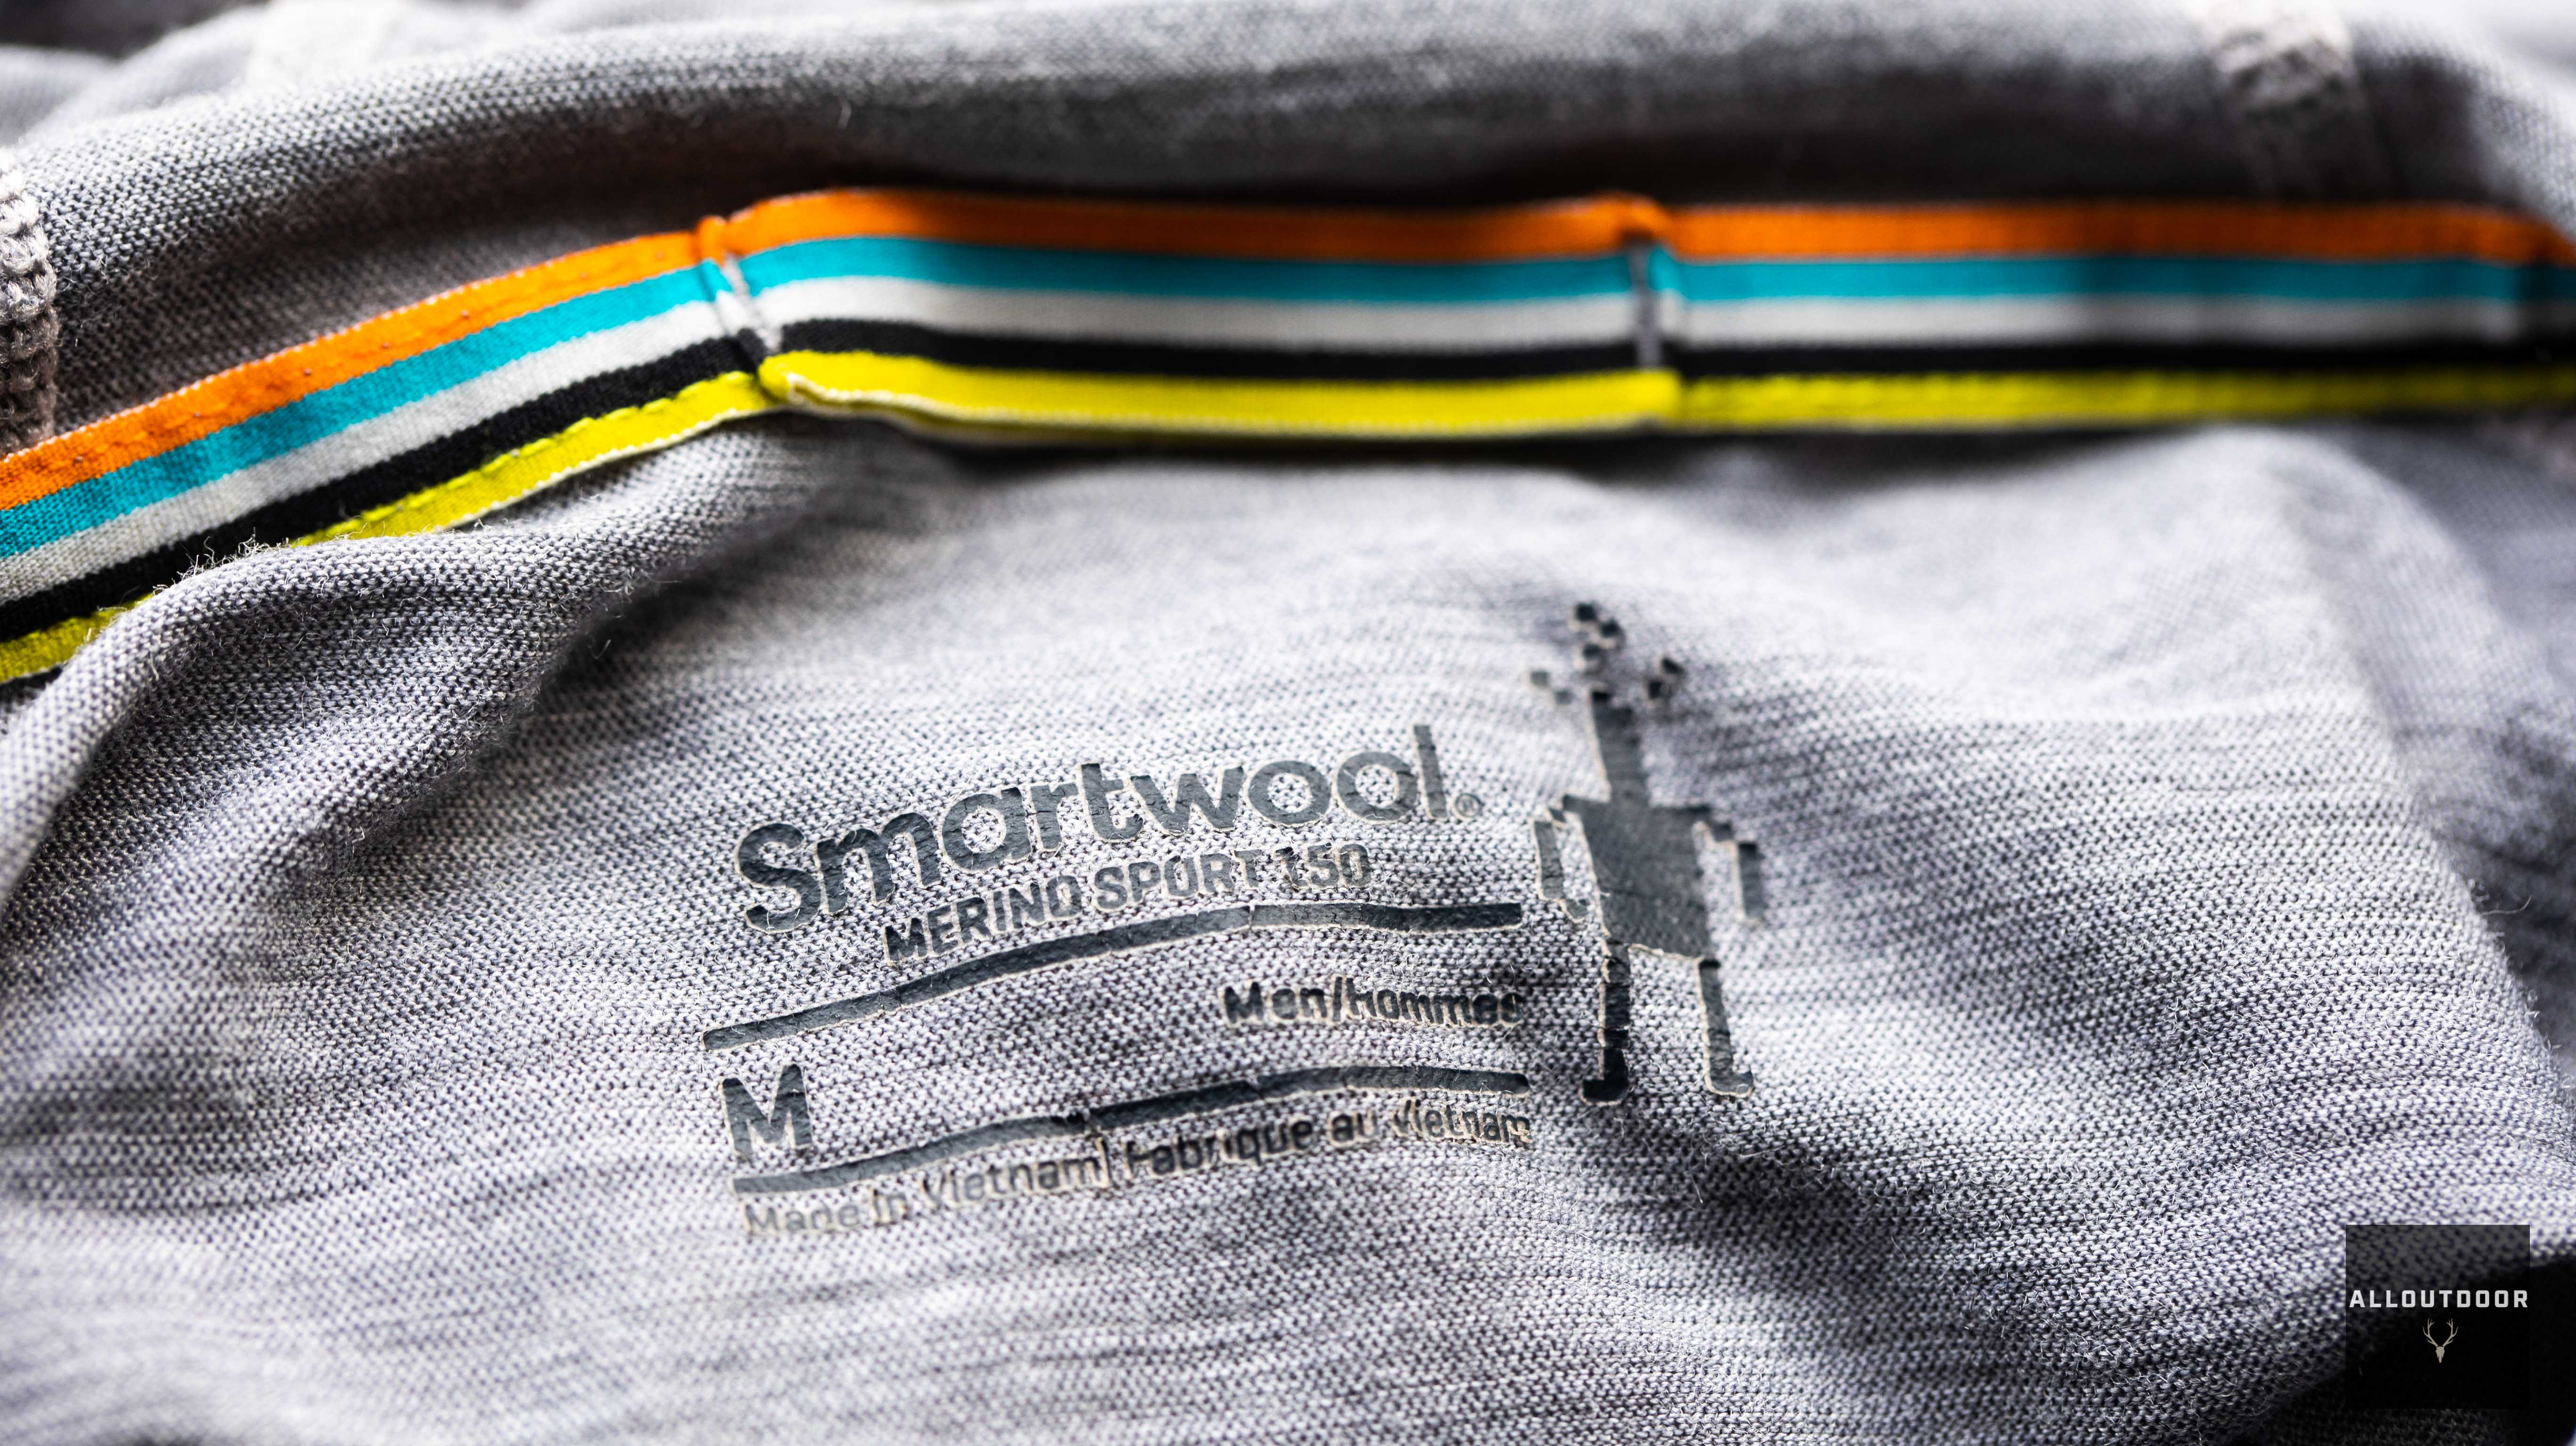 AO Review: Smartwool Merino Sport Hooded Shirt - All Season Performer